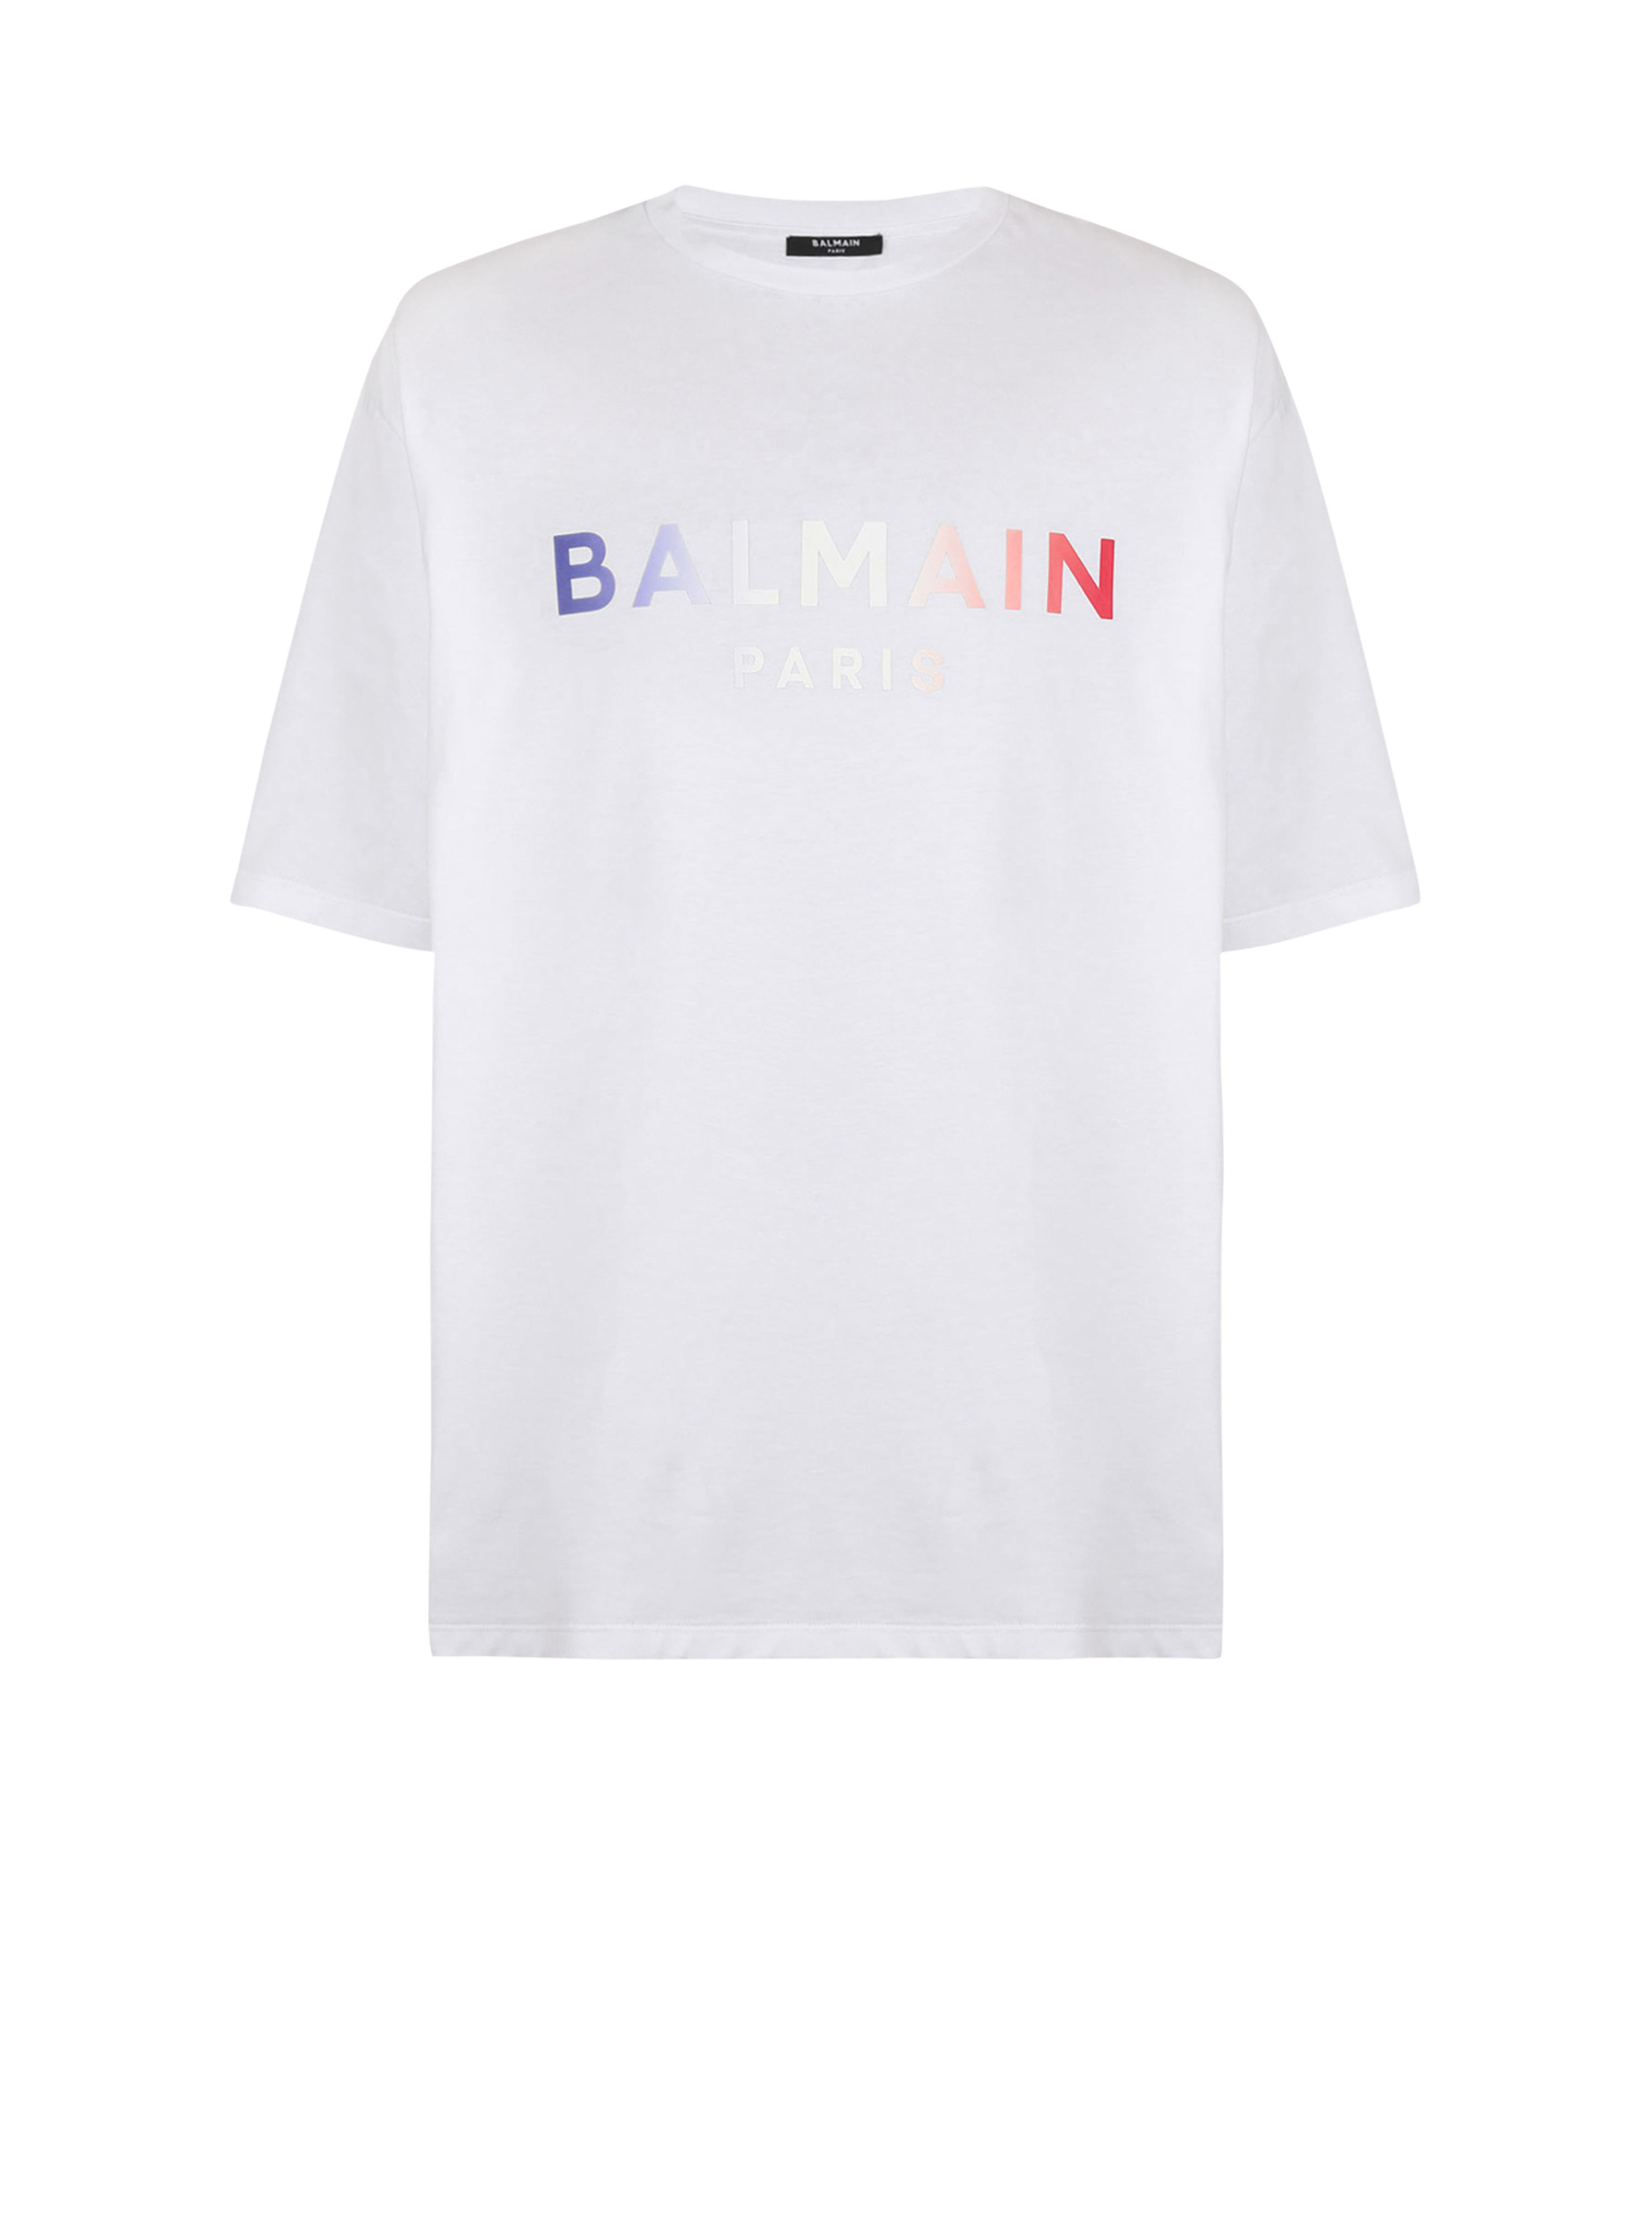 HIGH SUMMER CAPSULE - T-shirt en coton imprimé tie and dye logo Balmain Paris, blanc